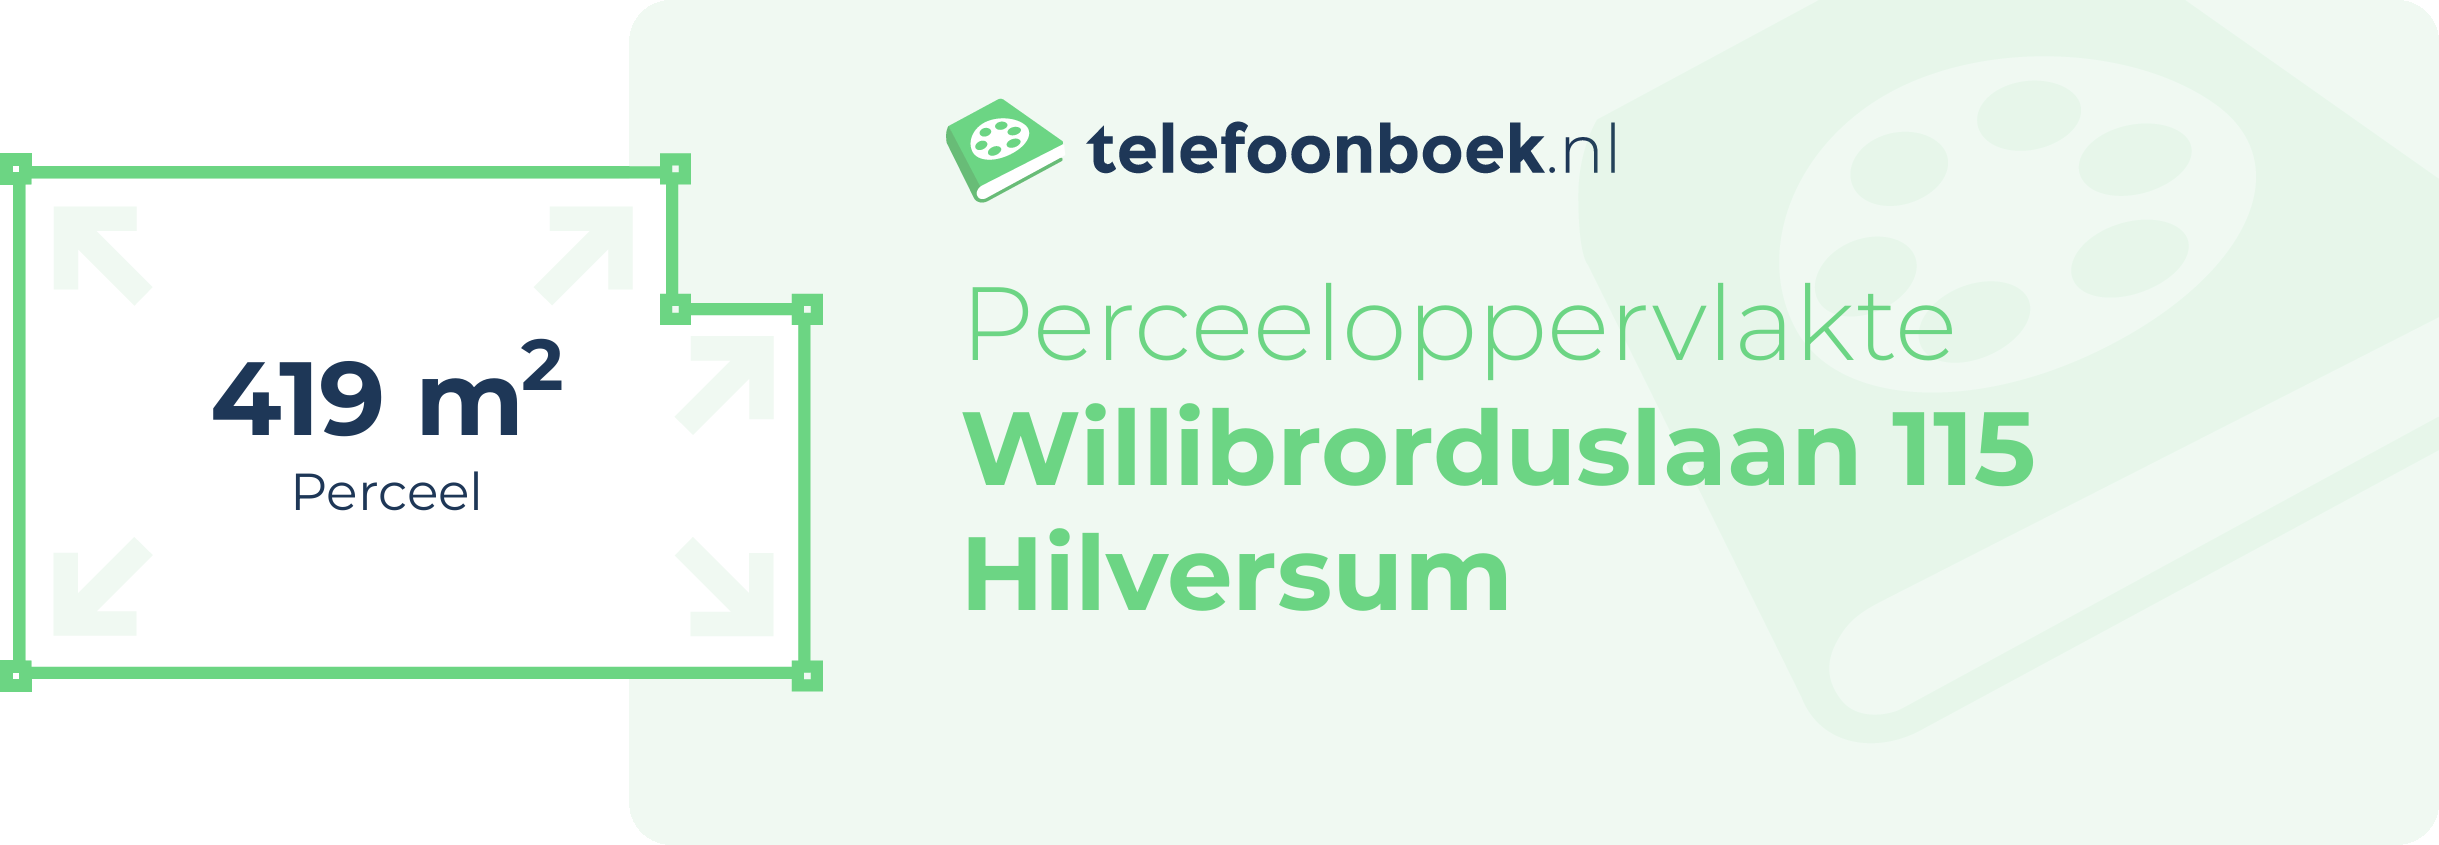 Perceeloppervlakte Willibrorduslaan 115 Hilversum